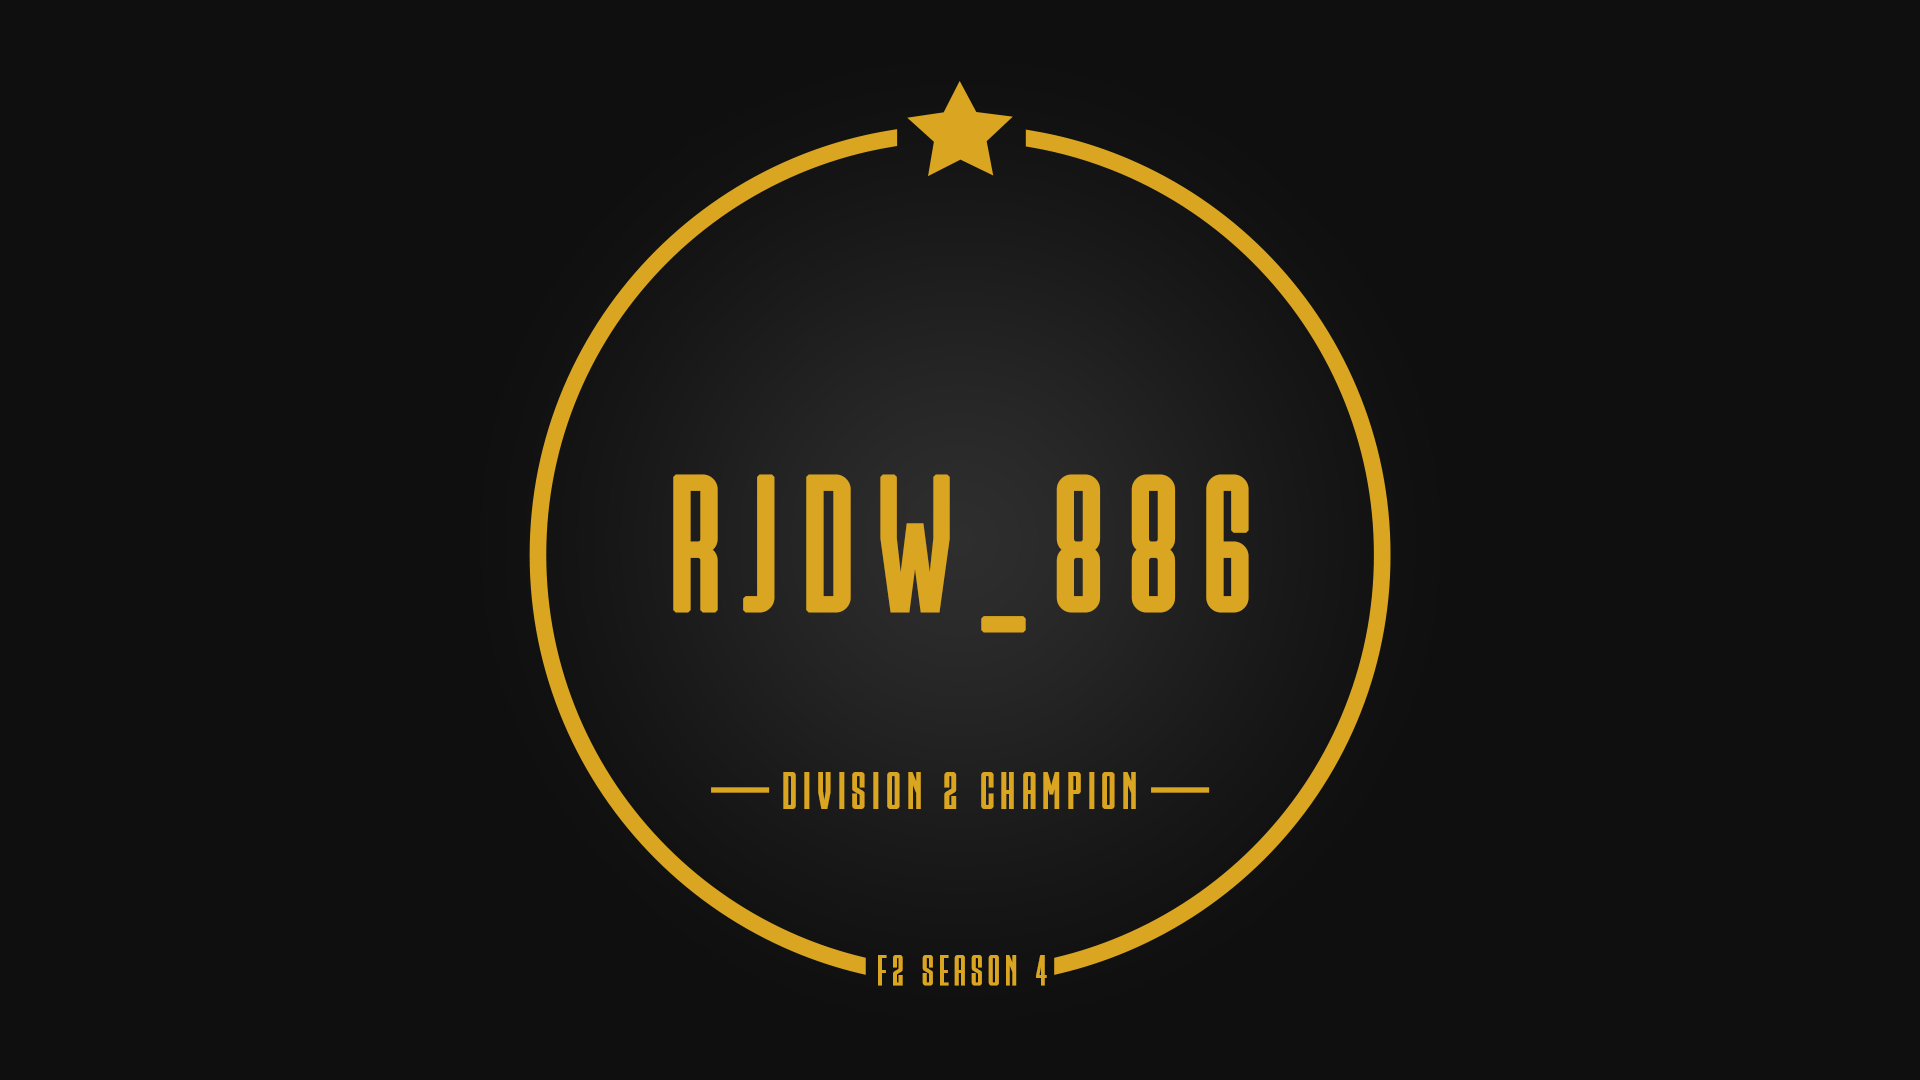 Division 2 Champion - RJDW_886